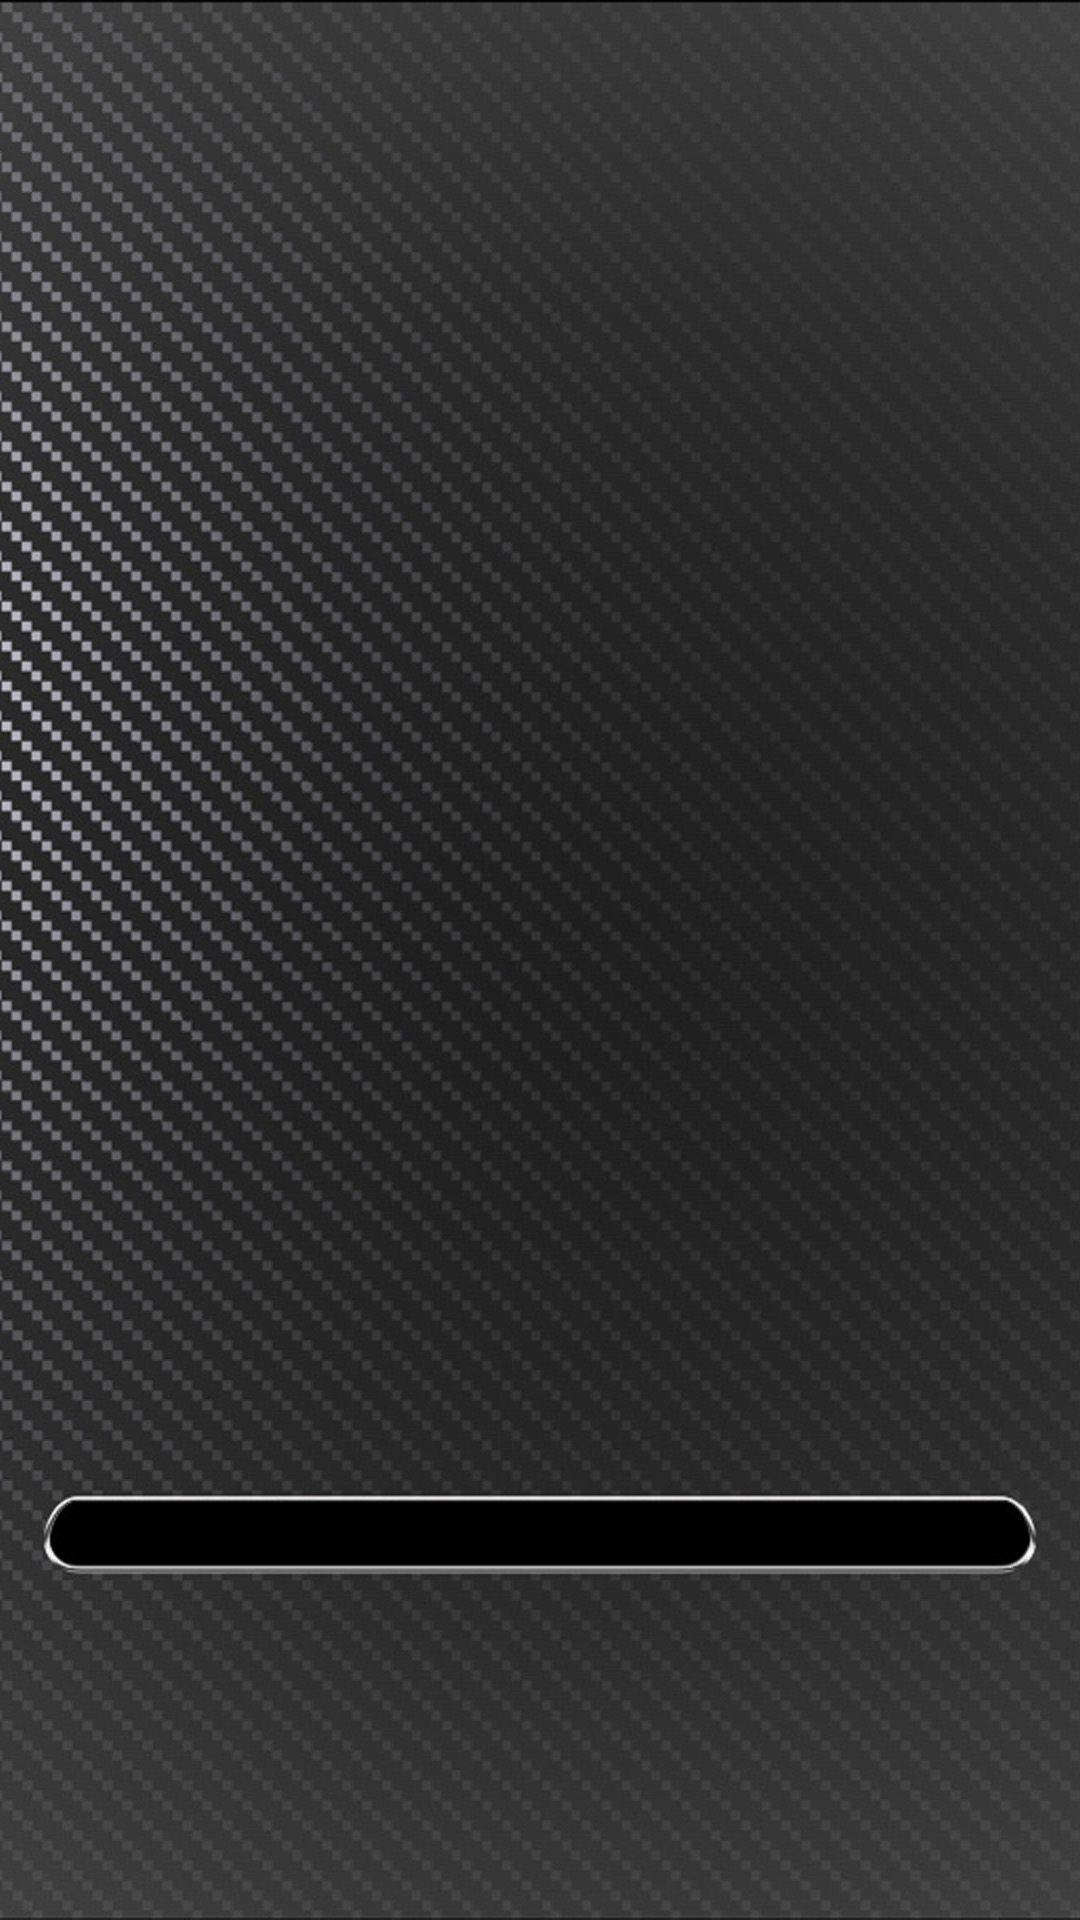 Fiber Wallpaper for Galaxy S5